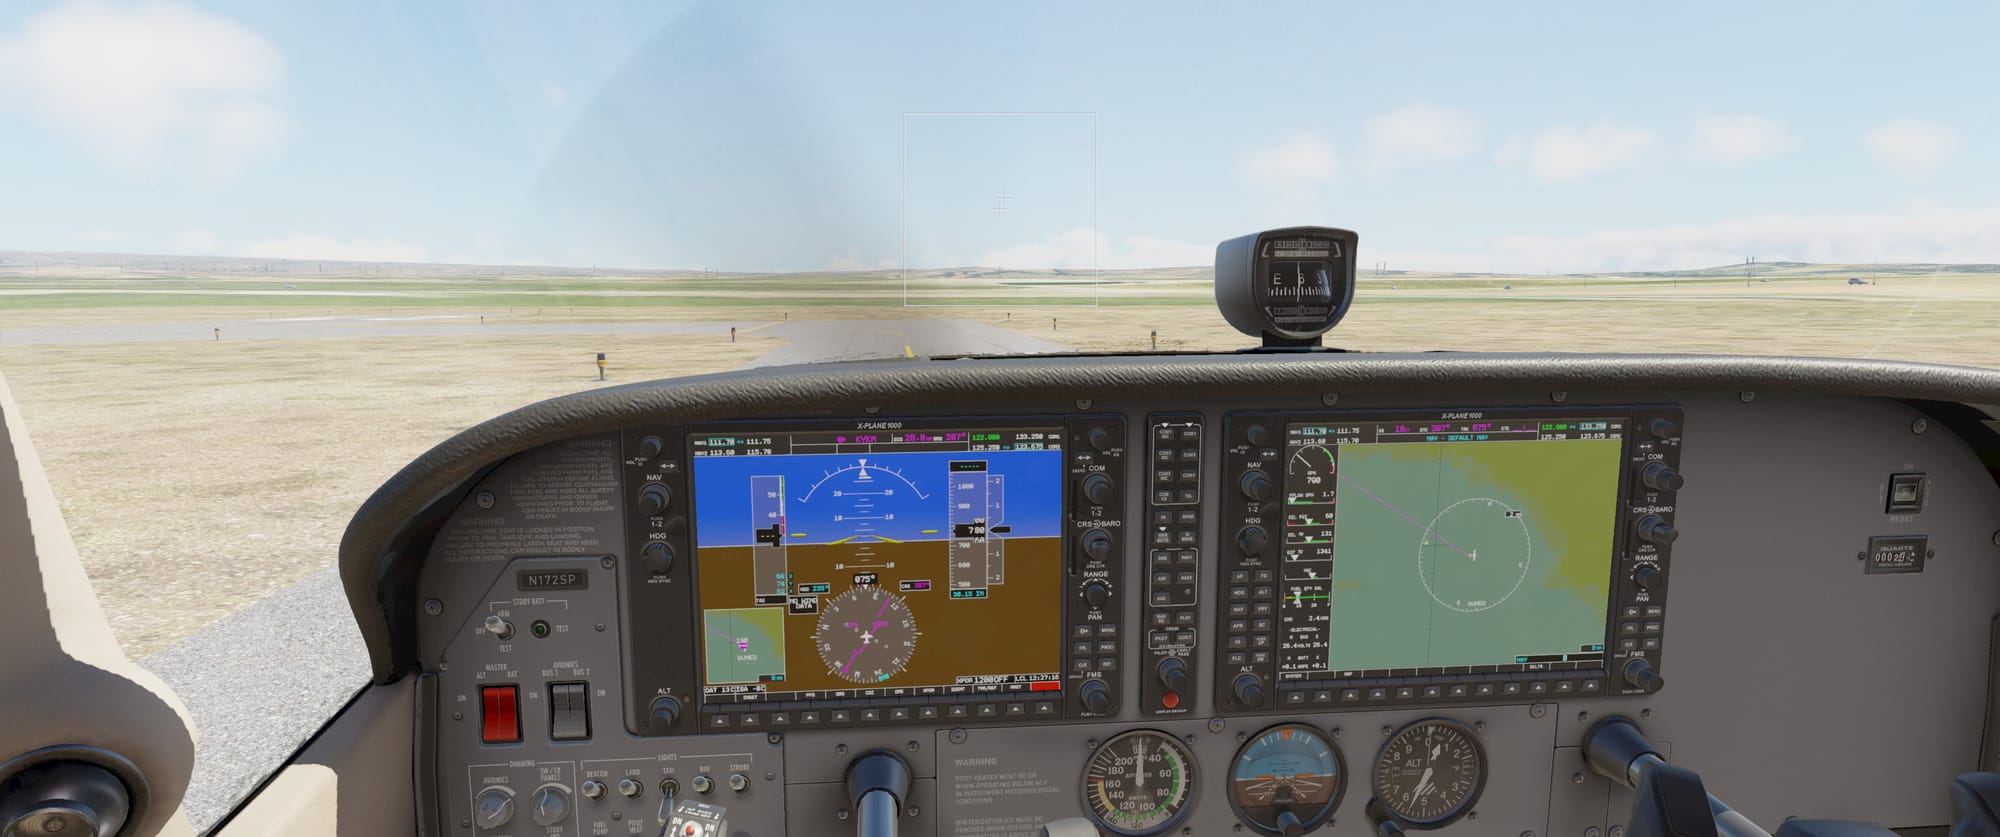 Flight Simulator and PilotEdge For IFR Training